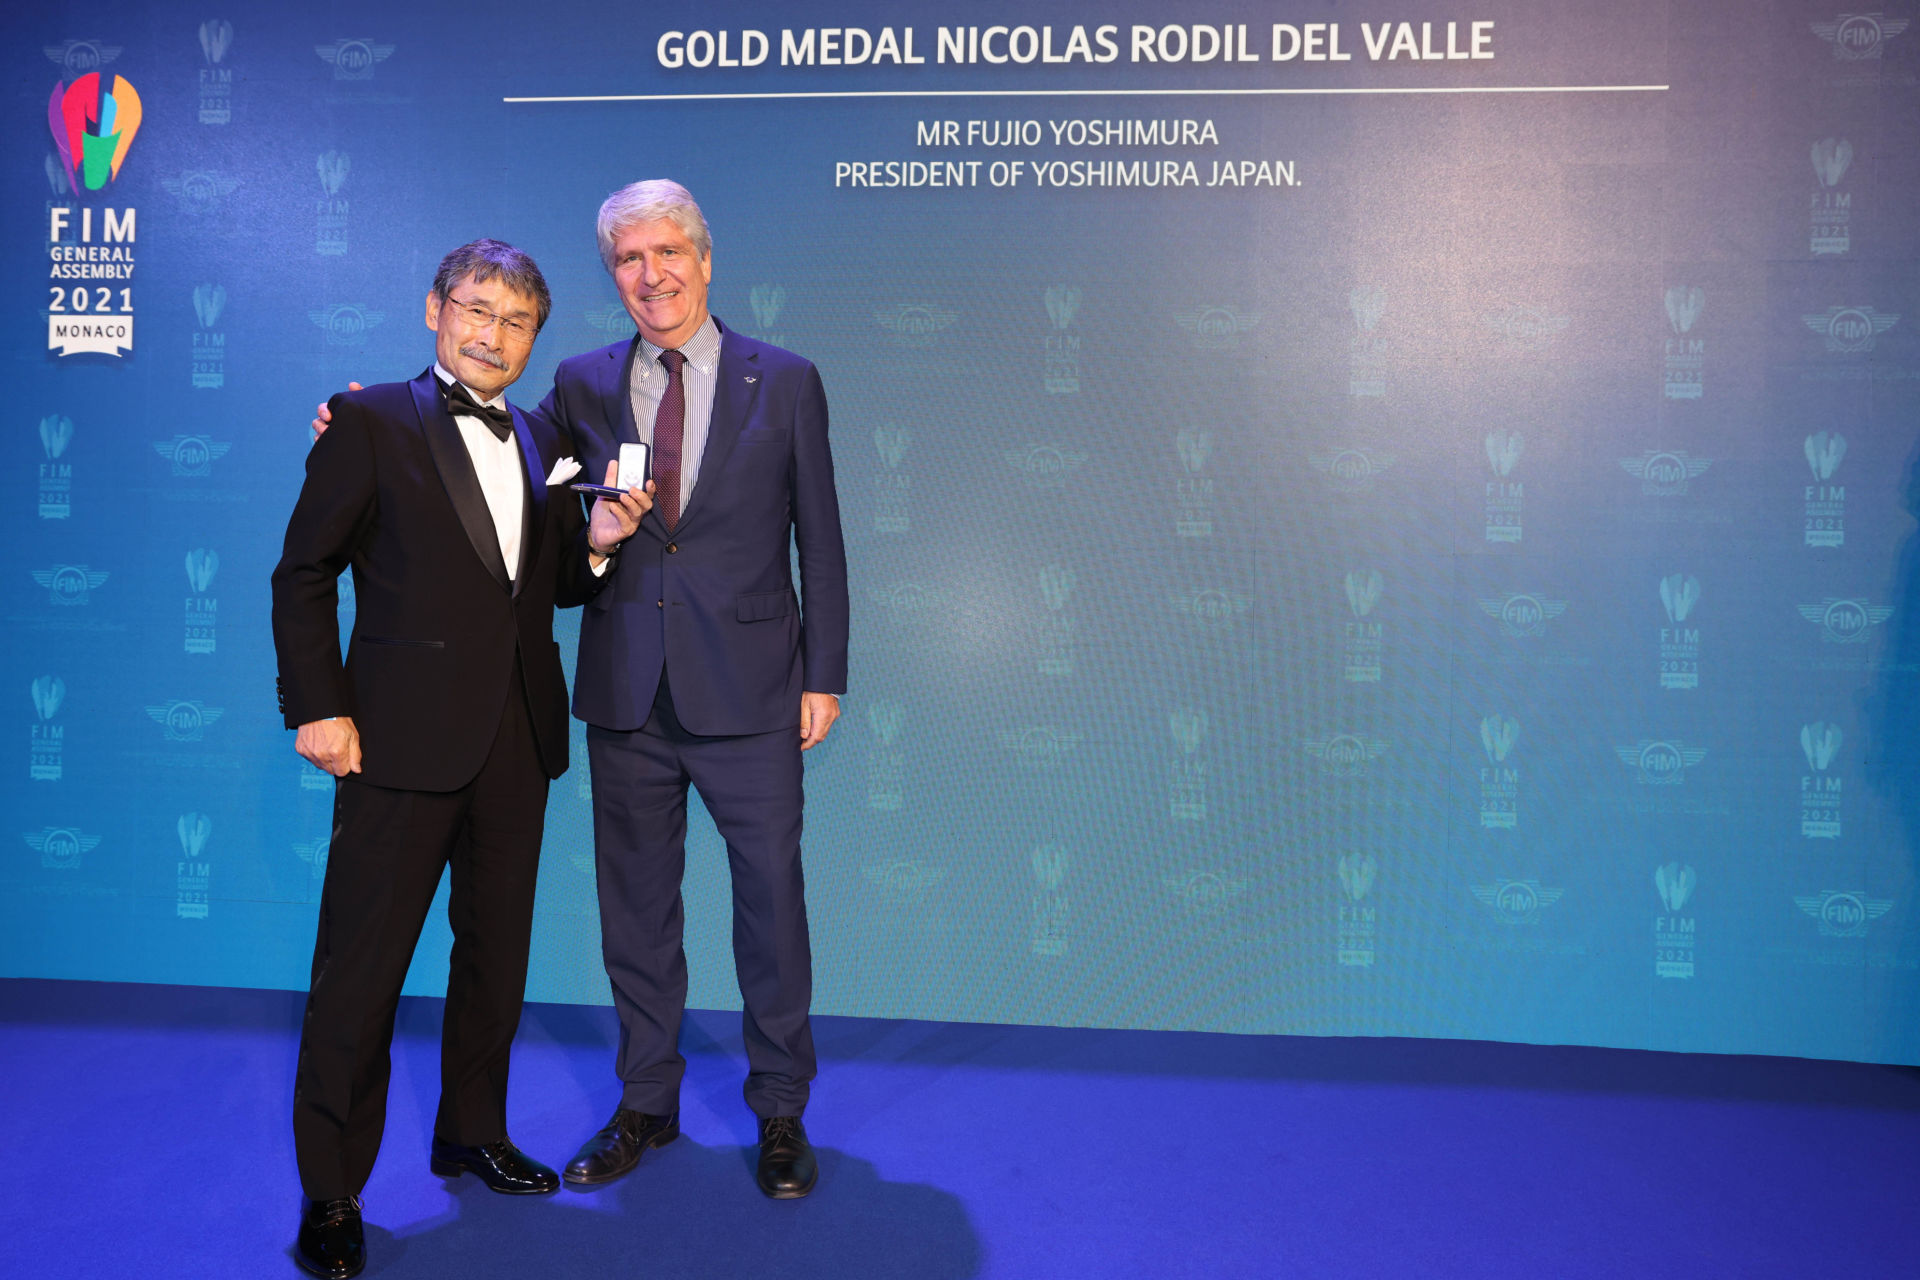 Yoshimura Japan President Fujio Yoshimura (left) receives the ‘Gold Medal Nicolas Rodin del Valle’ from FIM President Jorge Viegas in Monaco. Photo by David Reygondeau/@goodshoot, courtesy Team Suzuki Press Office.